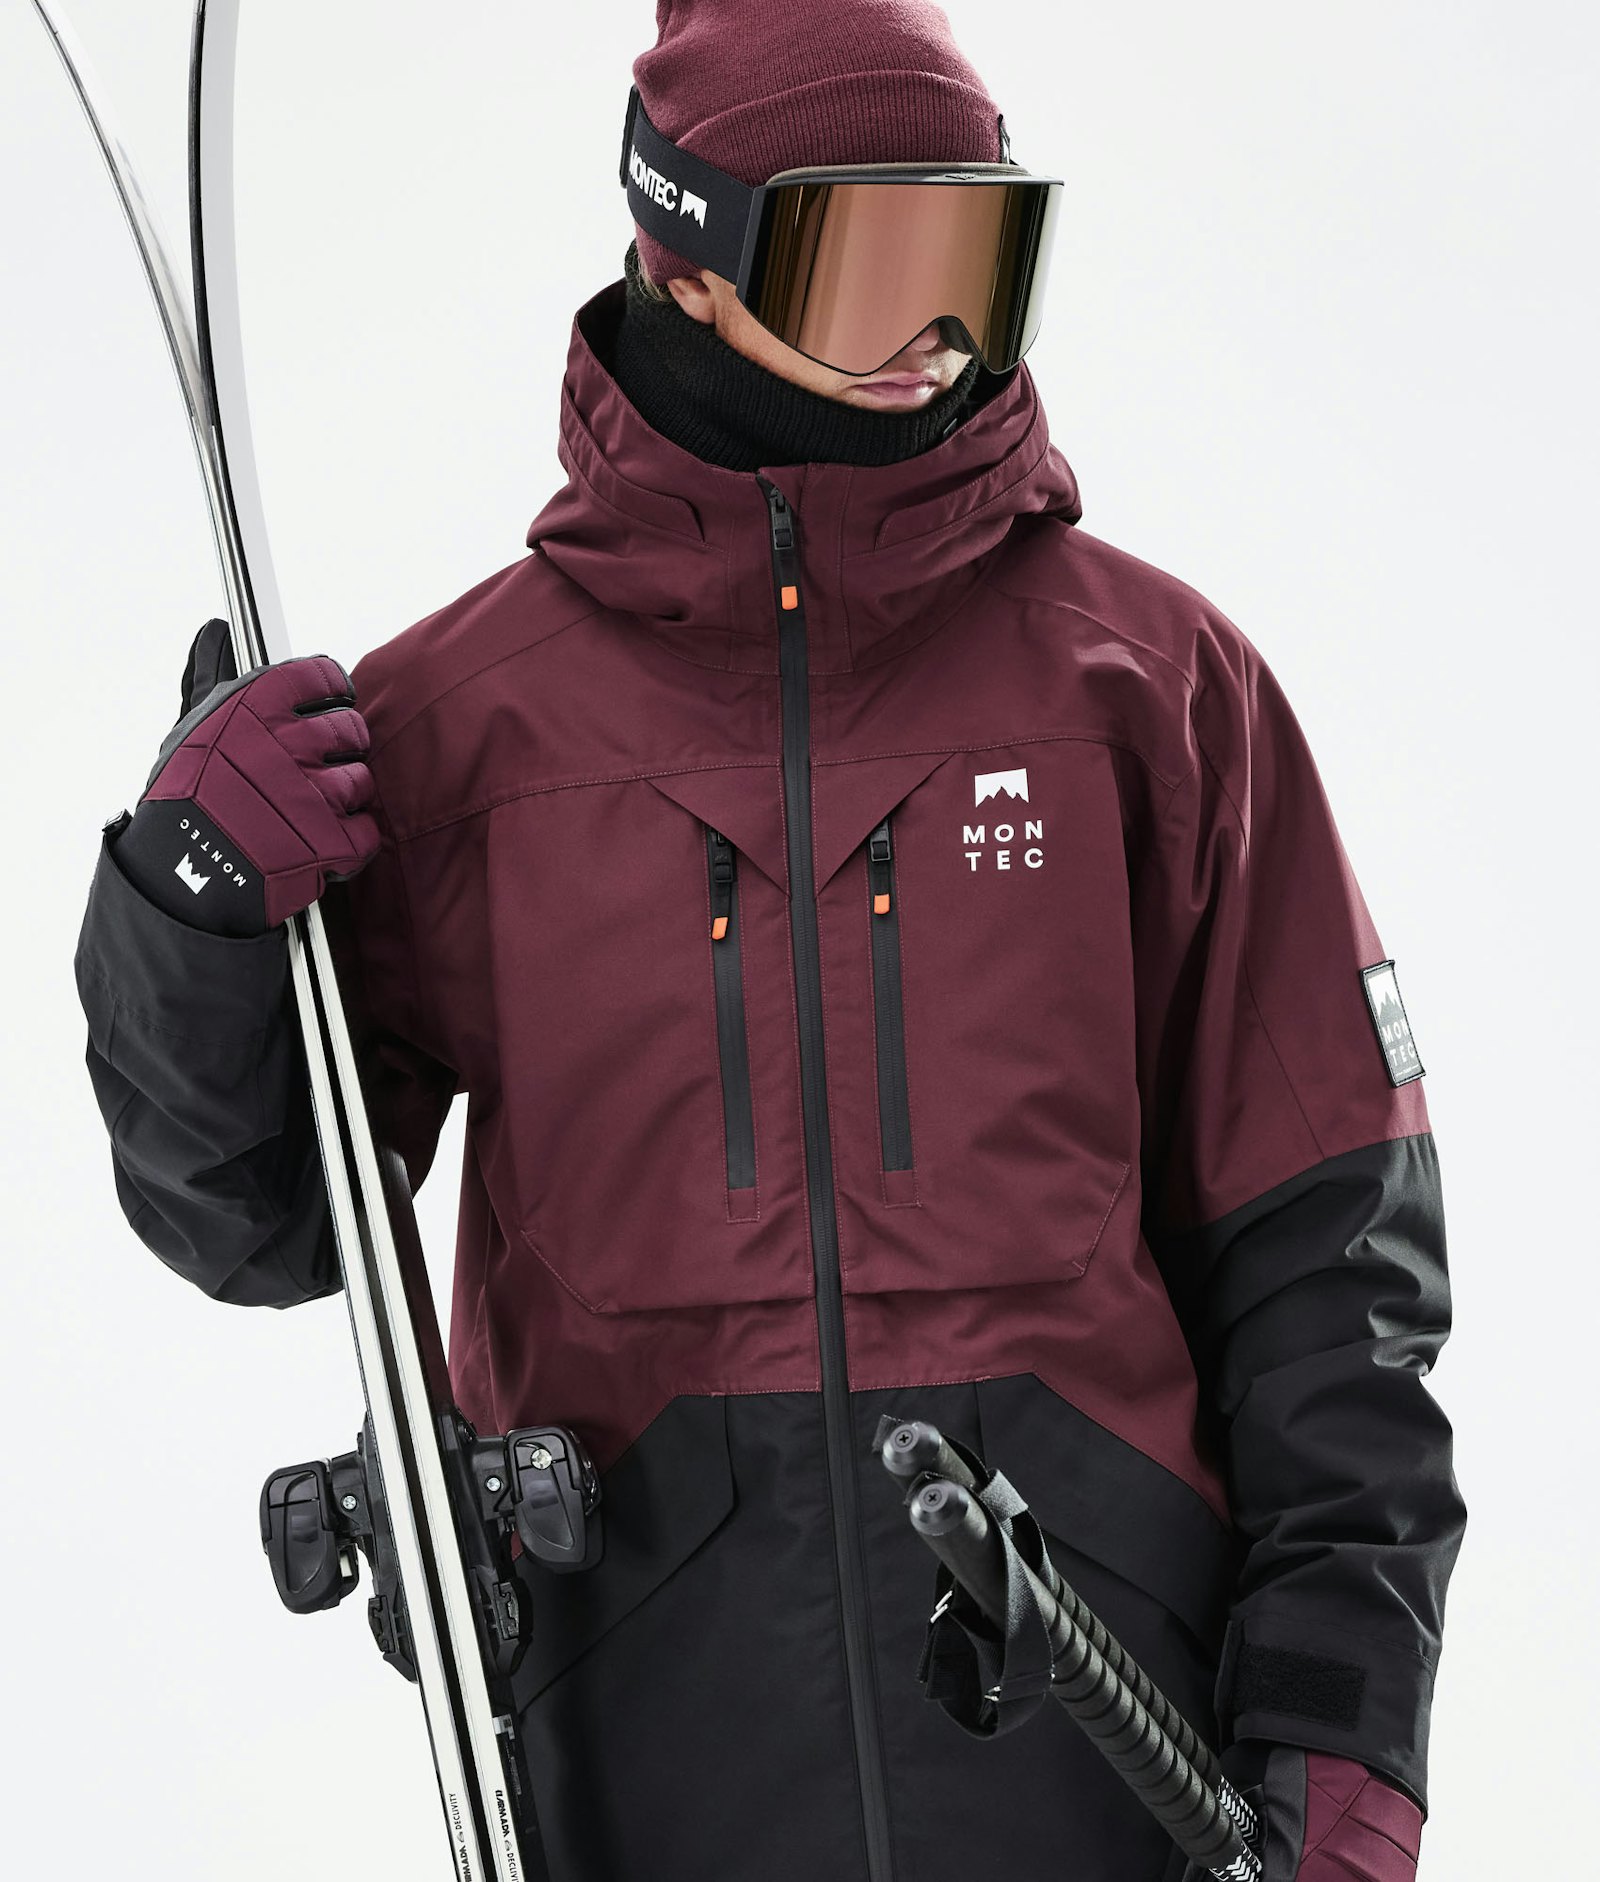 Moss 2021 スキージャケット メンズ Burgundy/Black